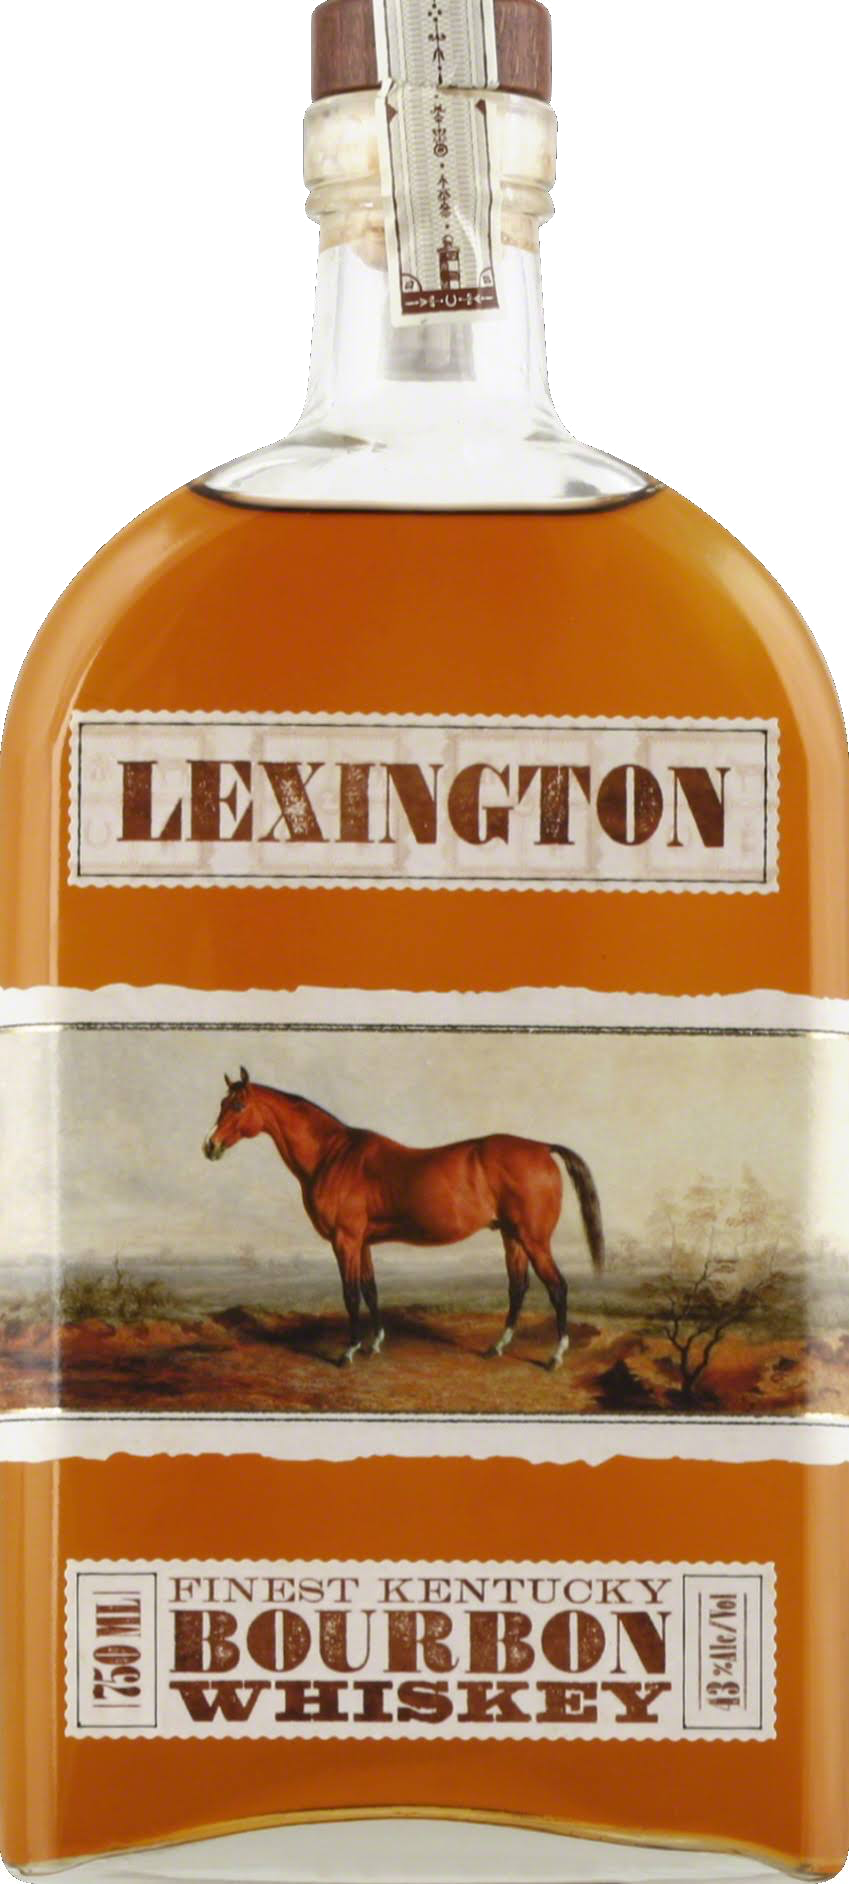 LEXINGTON BOURBON WHISKEY - Bk Wine Depot Corp